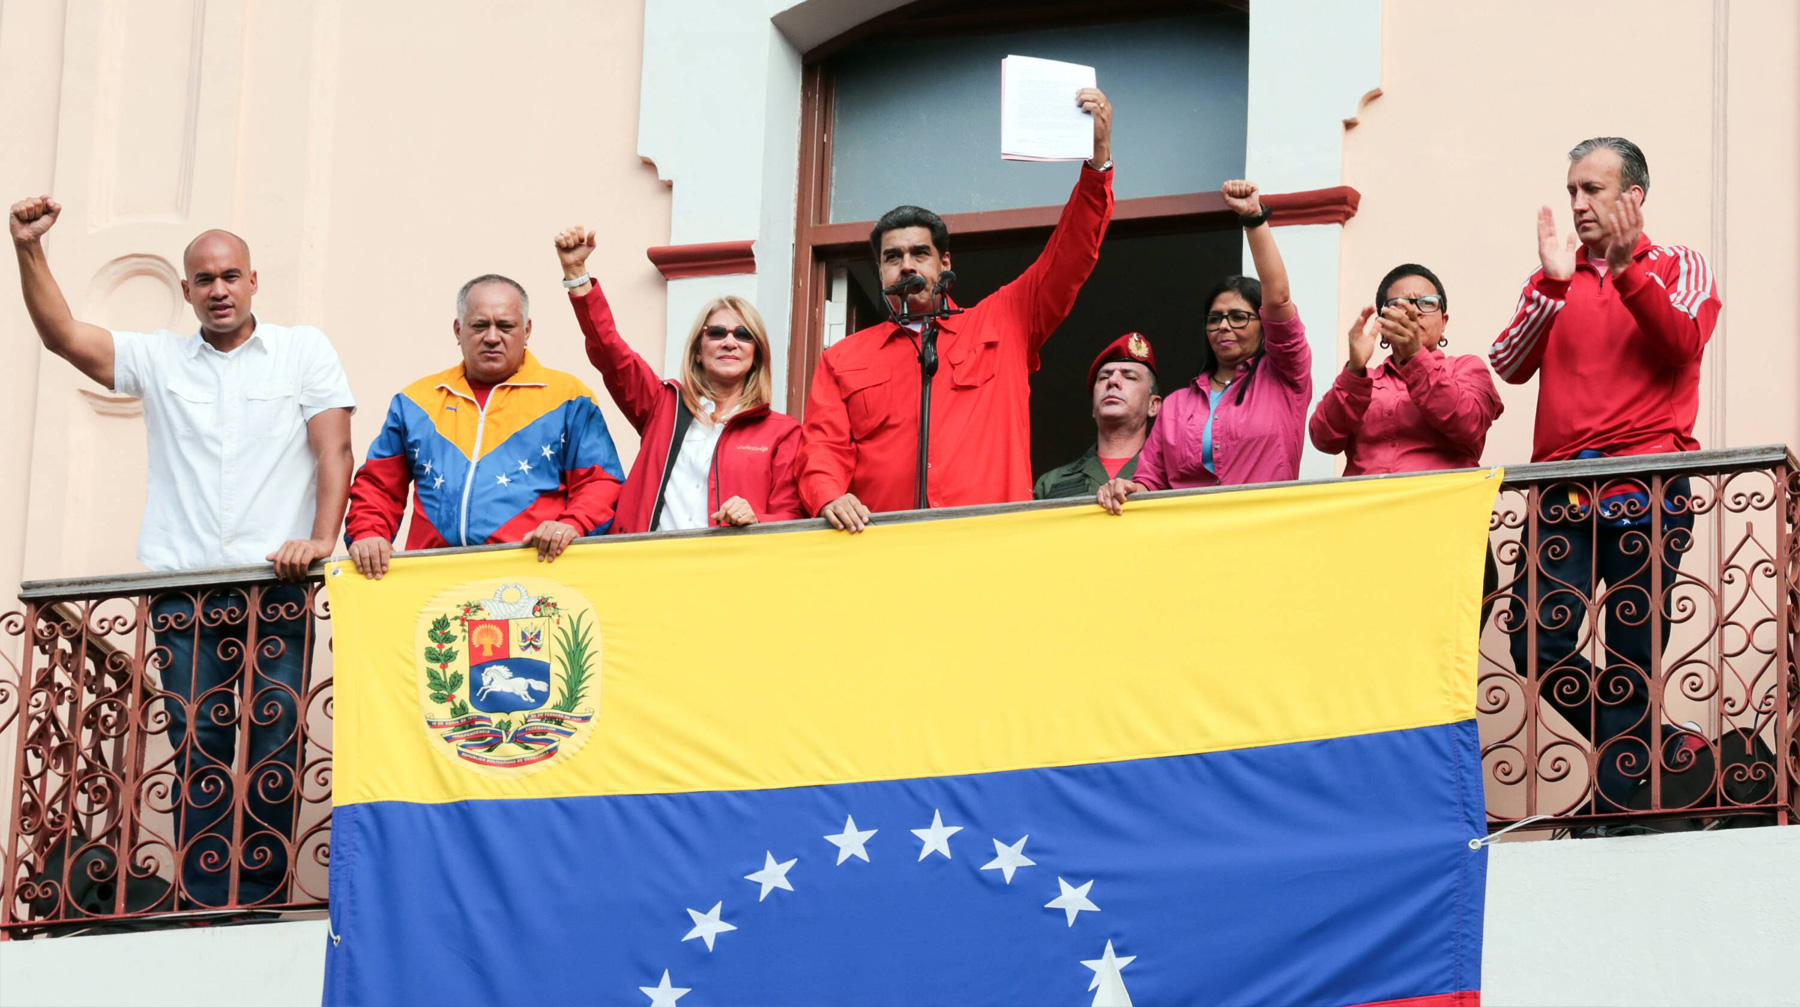 Об этом объявил президент республики Фото: © GLOBAL LOOK Press / [e]VENEZUELAN PRESIDENCY / imago stock&people